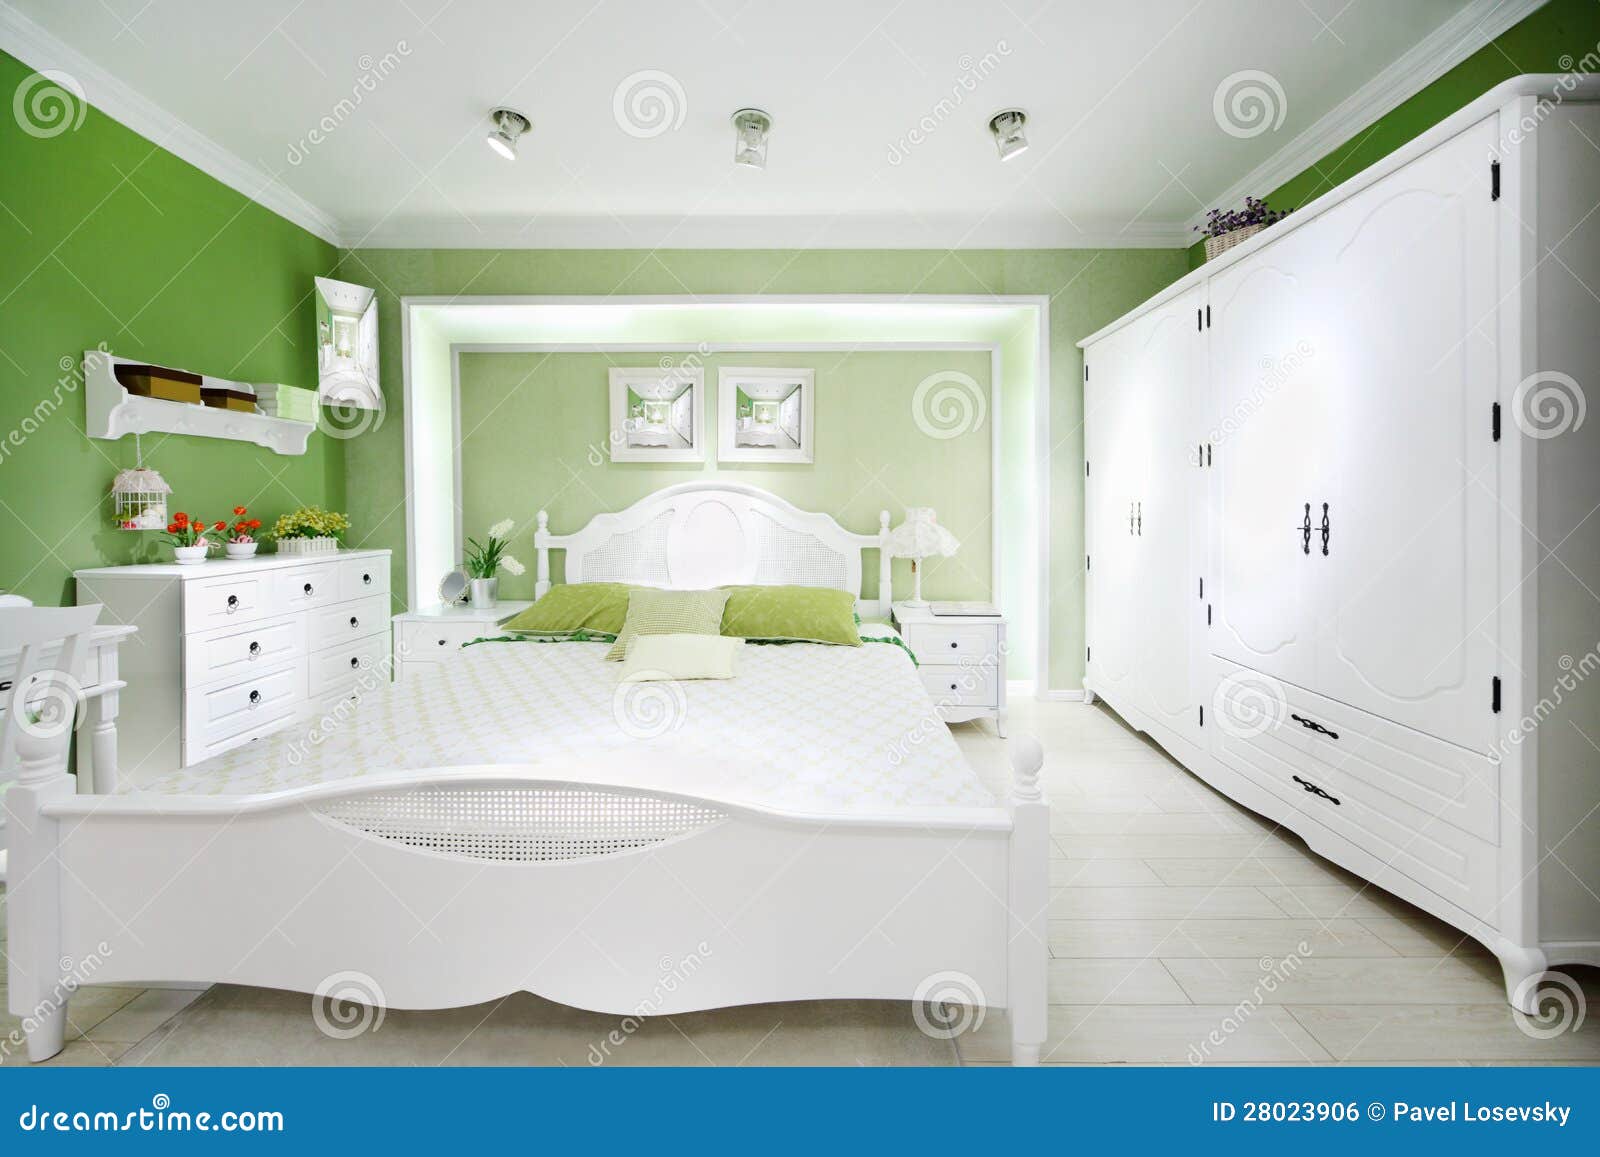 Stilvolles Grünes Schlafzimmer Lizenzfreies Stockbild - Bild: 28023906